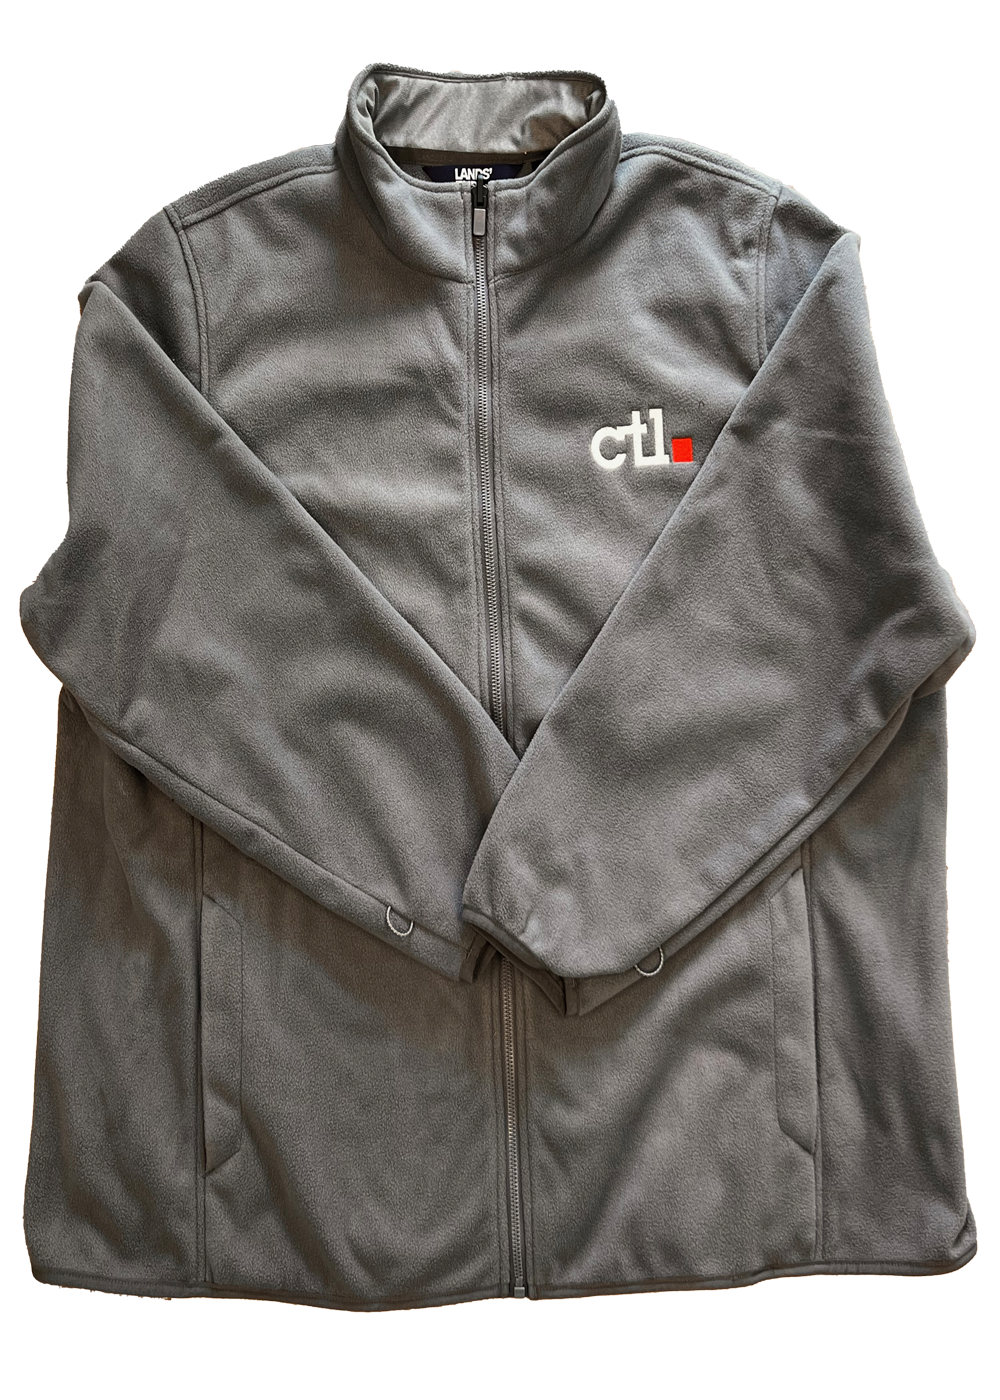 CTL Logo'd Land's End Gray Zip-Up Fleece